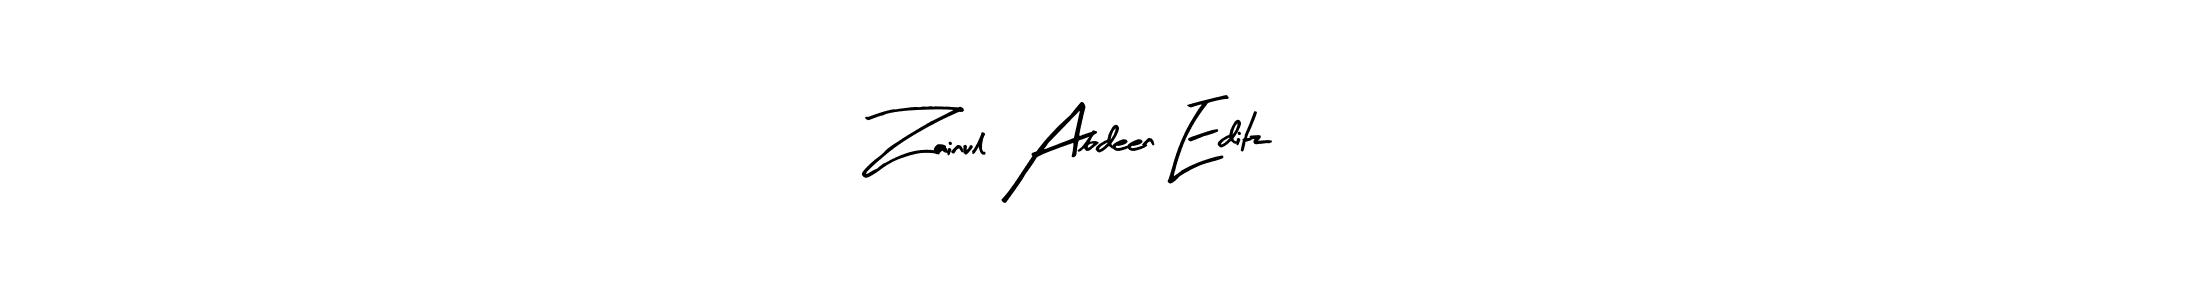 How to Draw Zainul Abdeen Editz 28 signature style? Arty Signature is a latest design signature styles for name Zainul Abdeen Editz 28. Zainul Abdeen Editz 28 signature style 8 images and pictures png